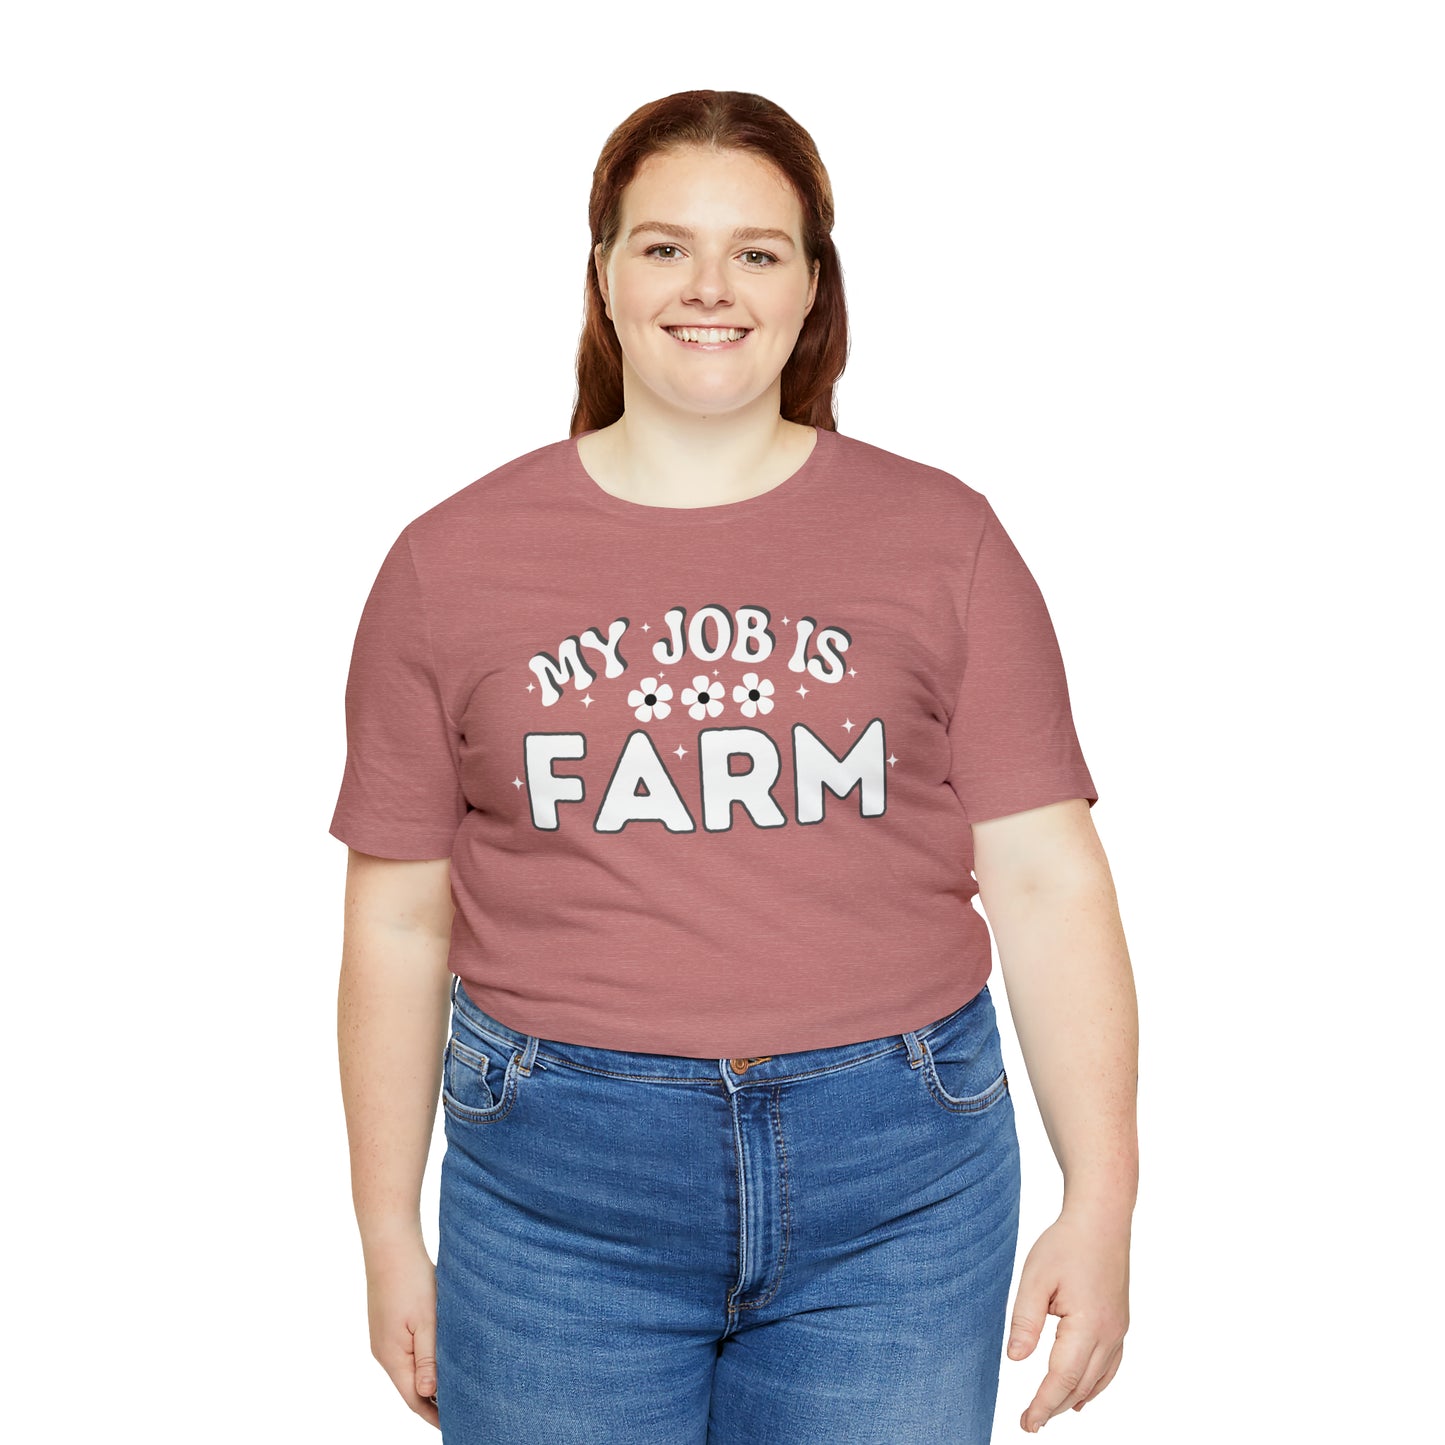 My Job is Farm Shirt Farmer Shirt Farming Shirt Homestead Gardening Shirt Farmers, Farmhand, Livestock Farmer, Crop Grower Horticulturist, Animal Scientist, Agricultural Engineer Environmental Scientist, 